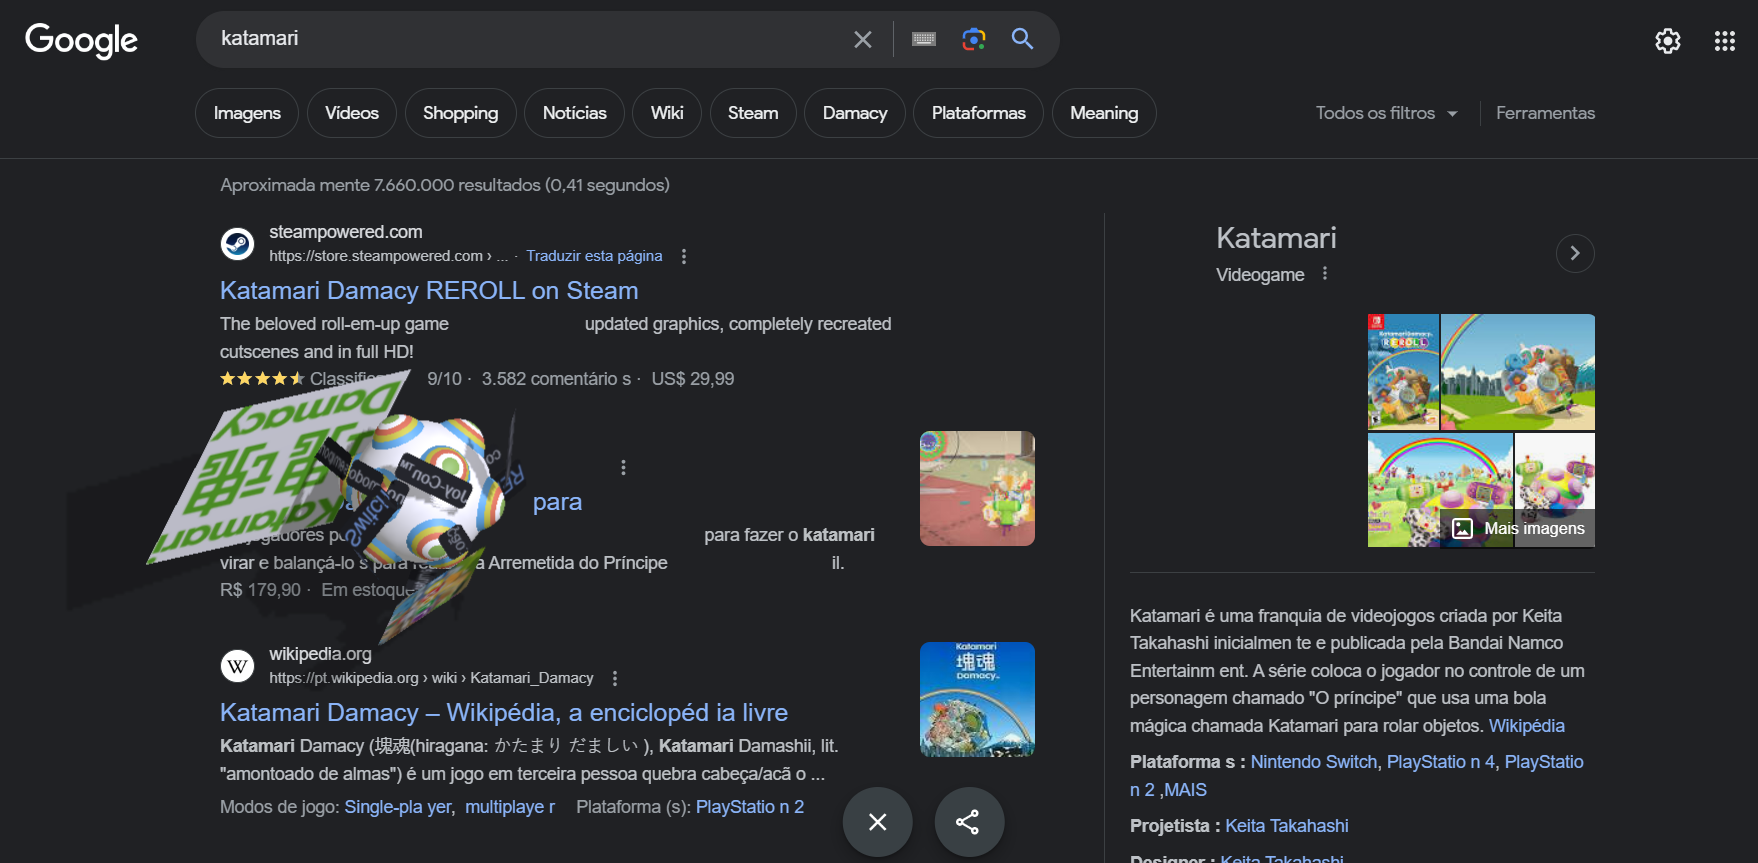 Captura mostra minigame de Katamari Damacy disponível no Google